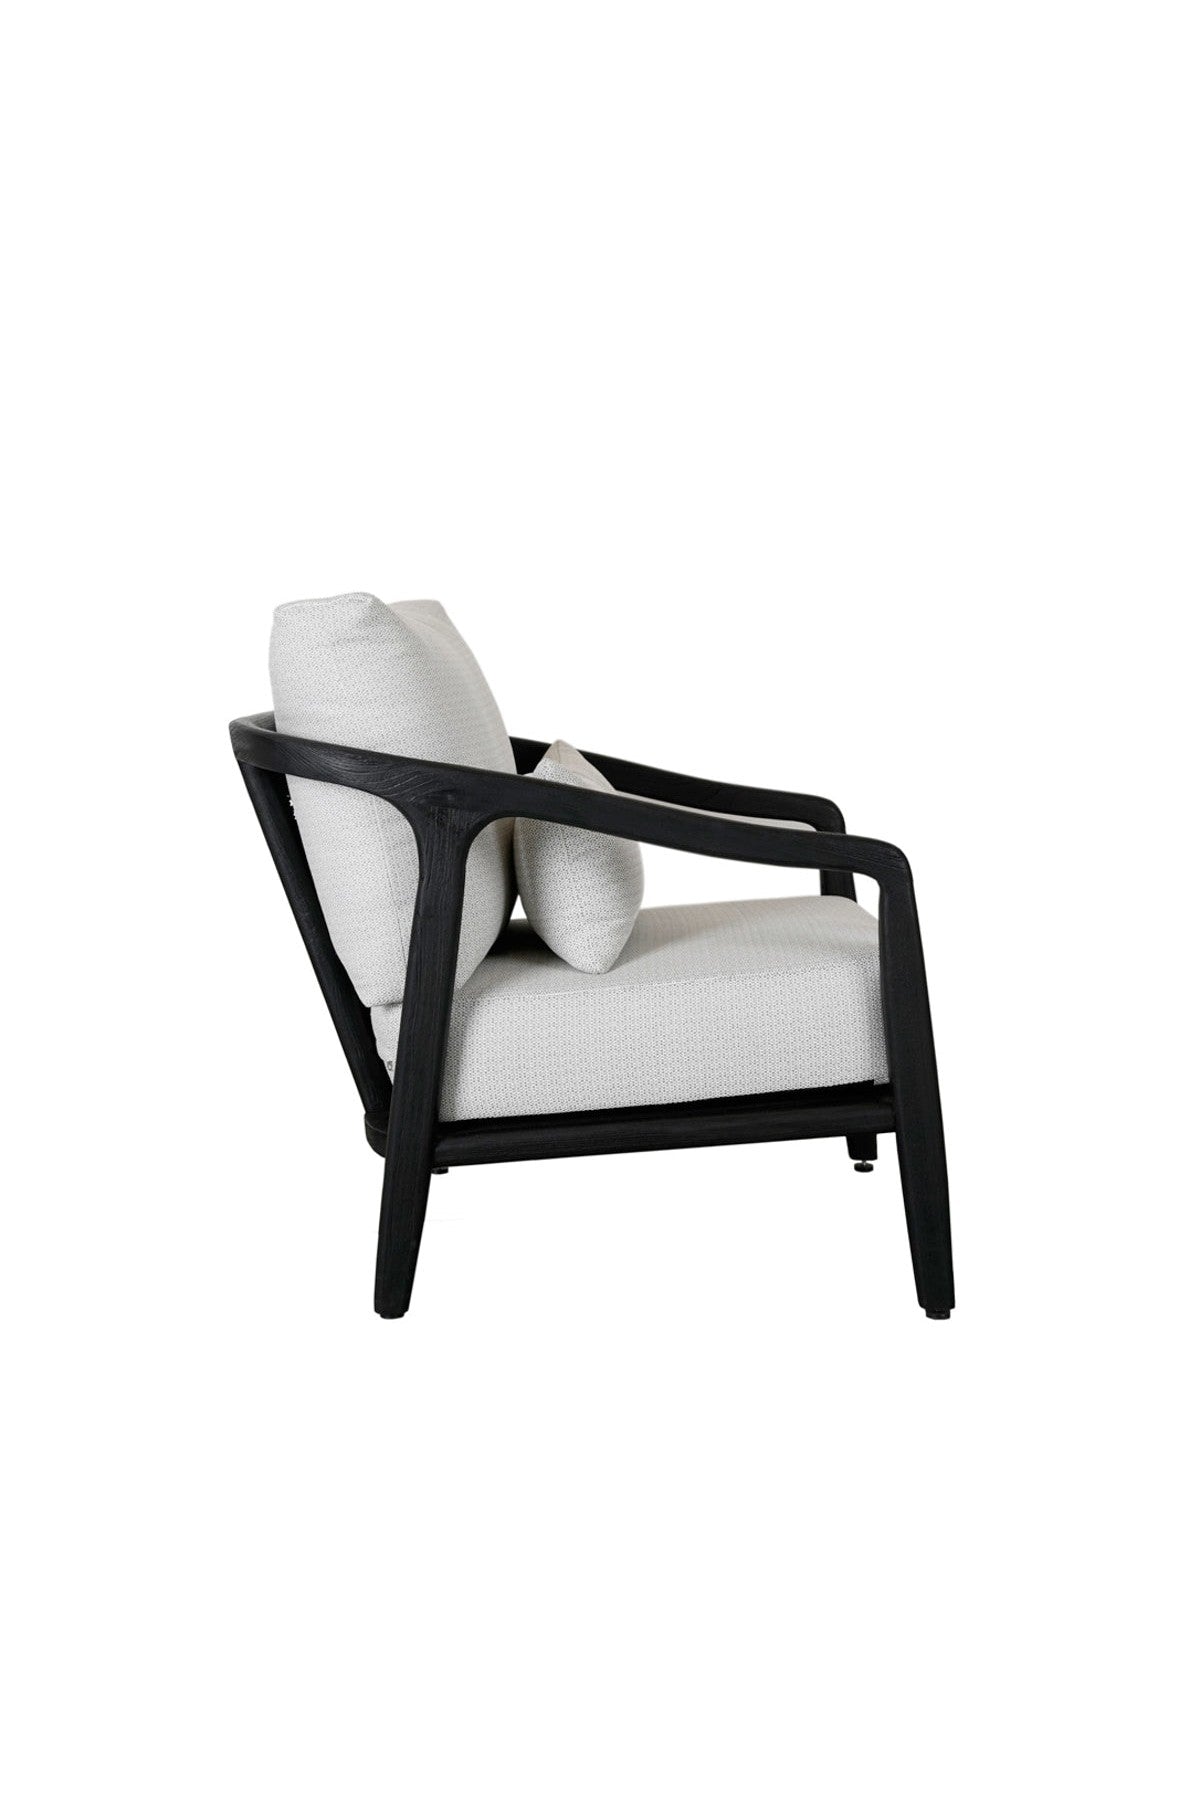 Geller Outdoor Accent Chair - 2 Colors